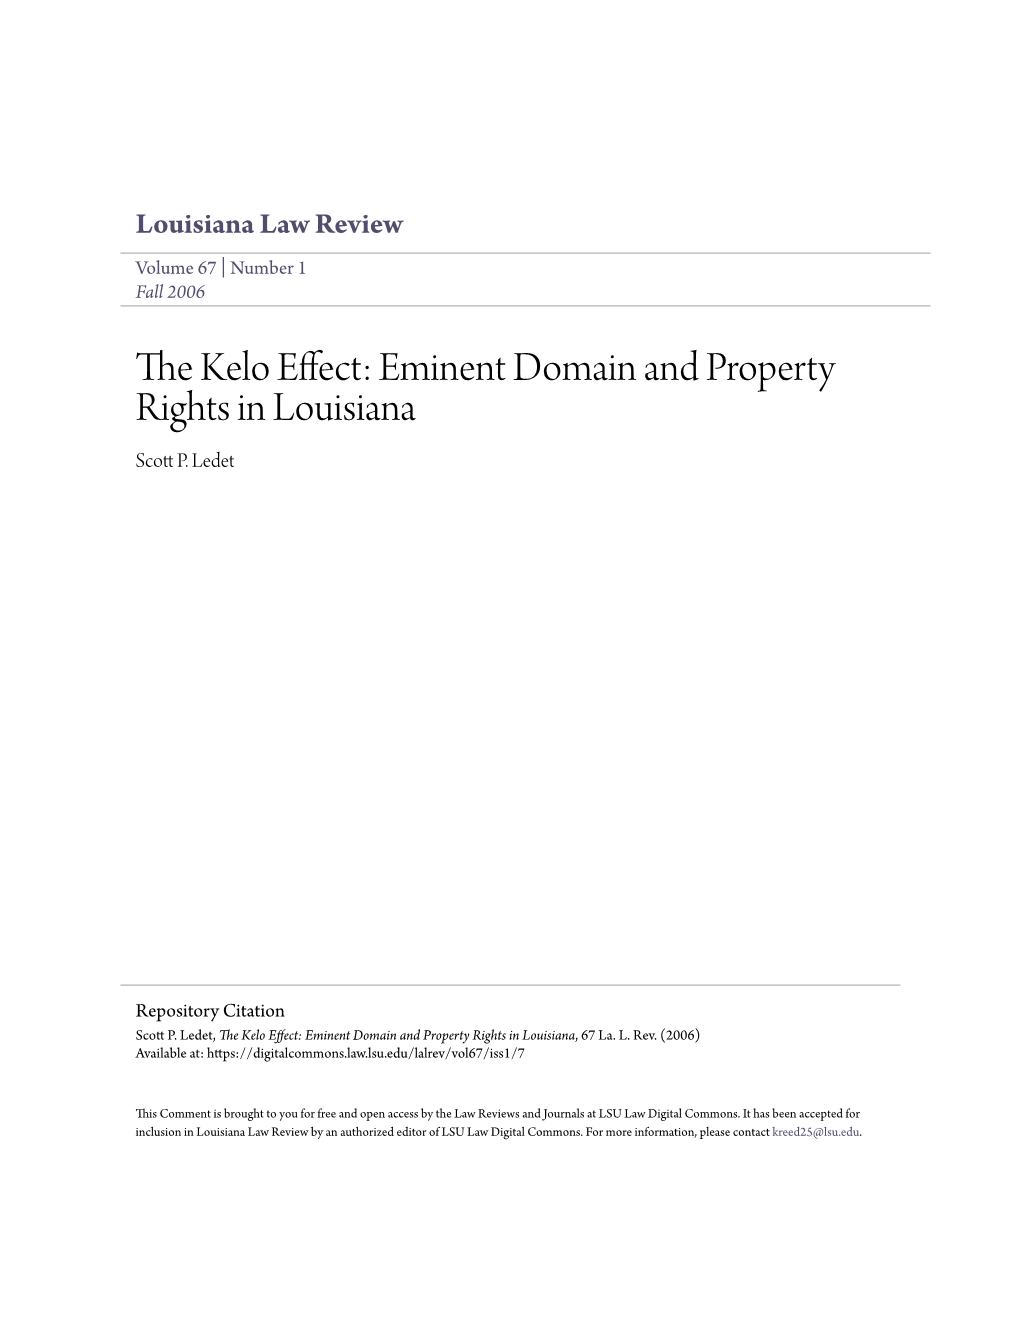 Eminent Domain and Property Rights in Louisiana Scott .P Ledet